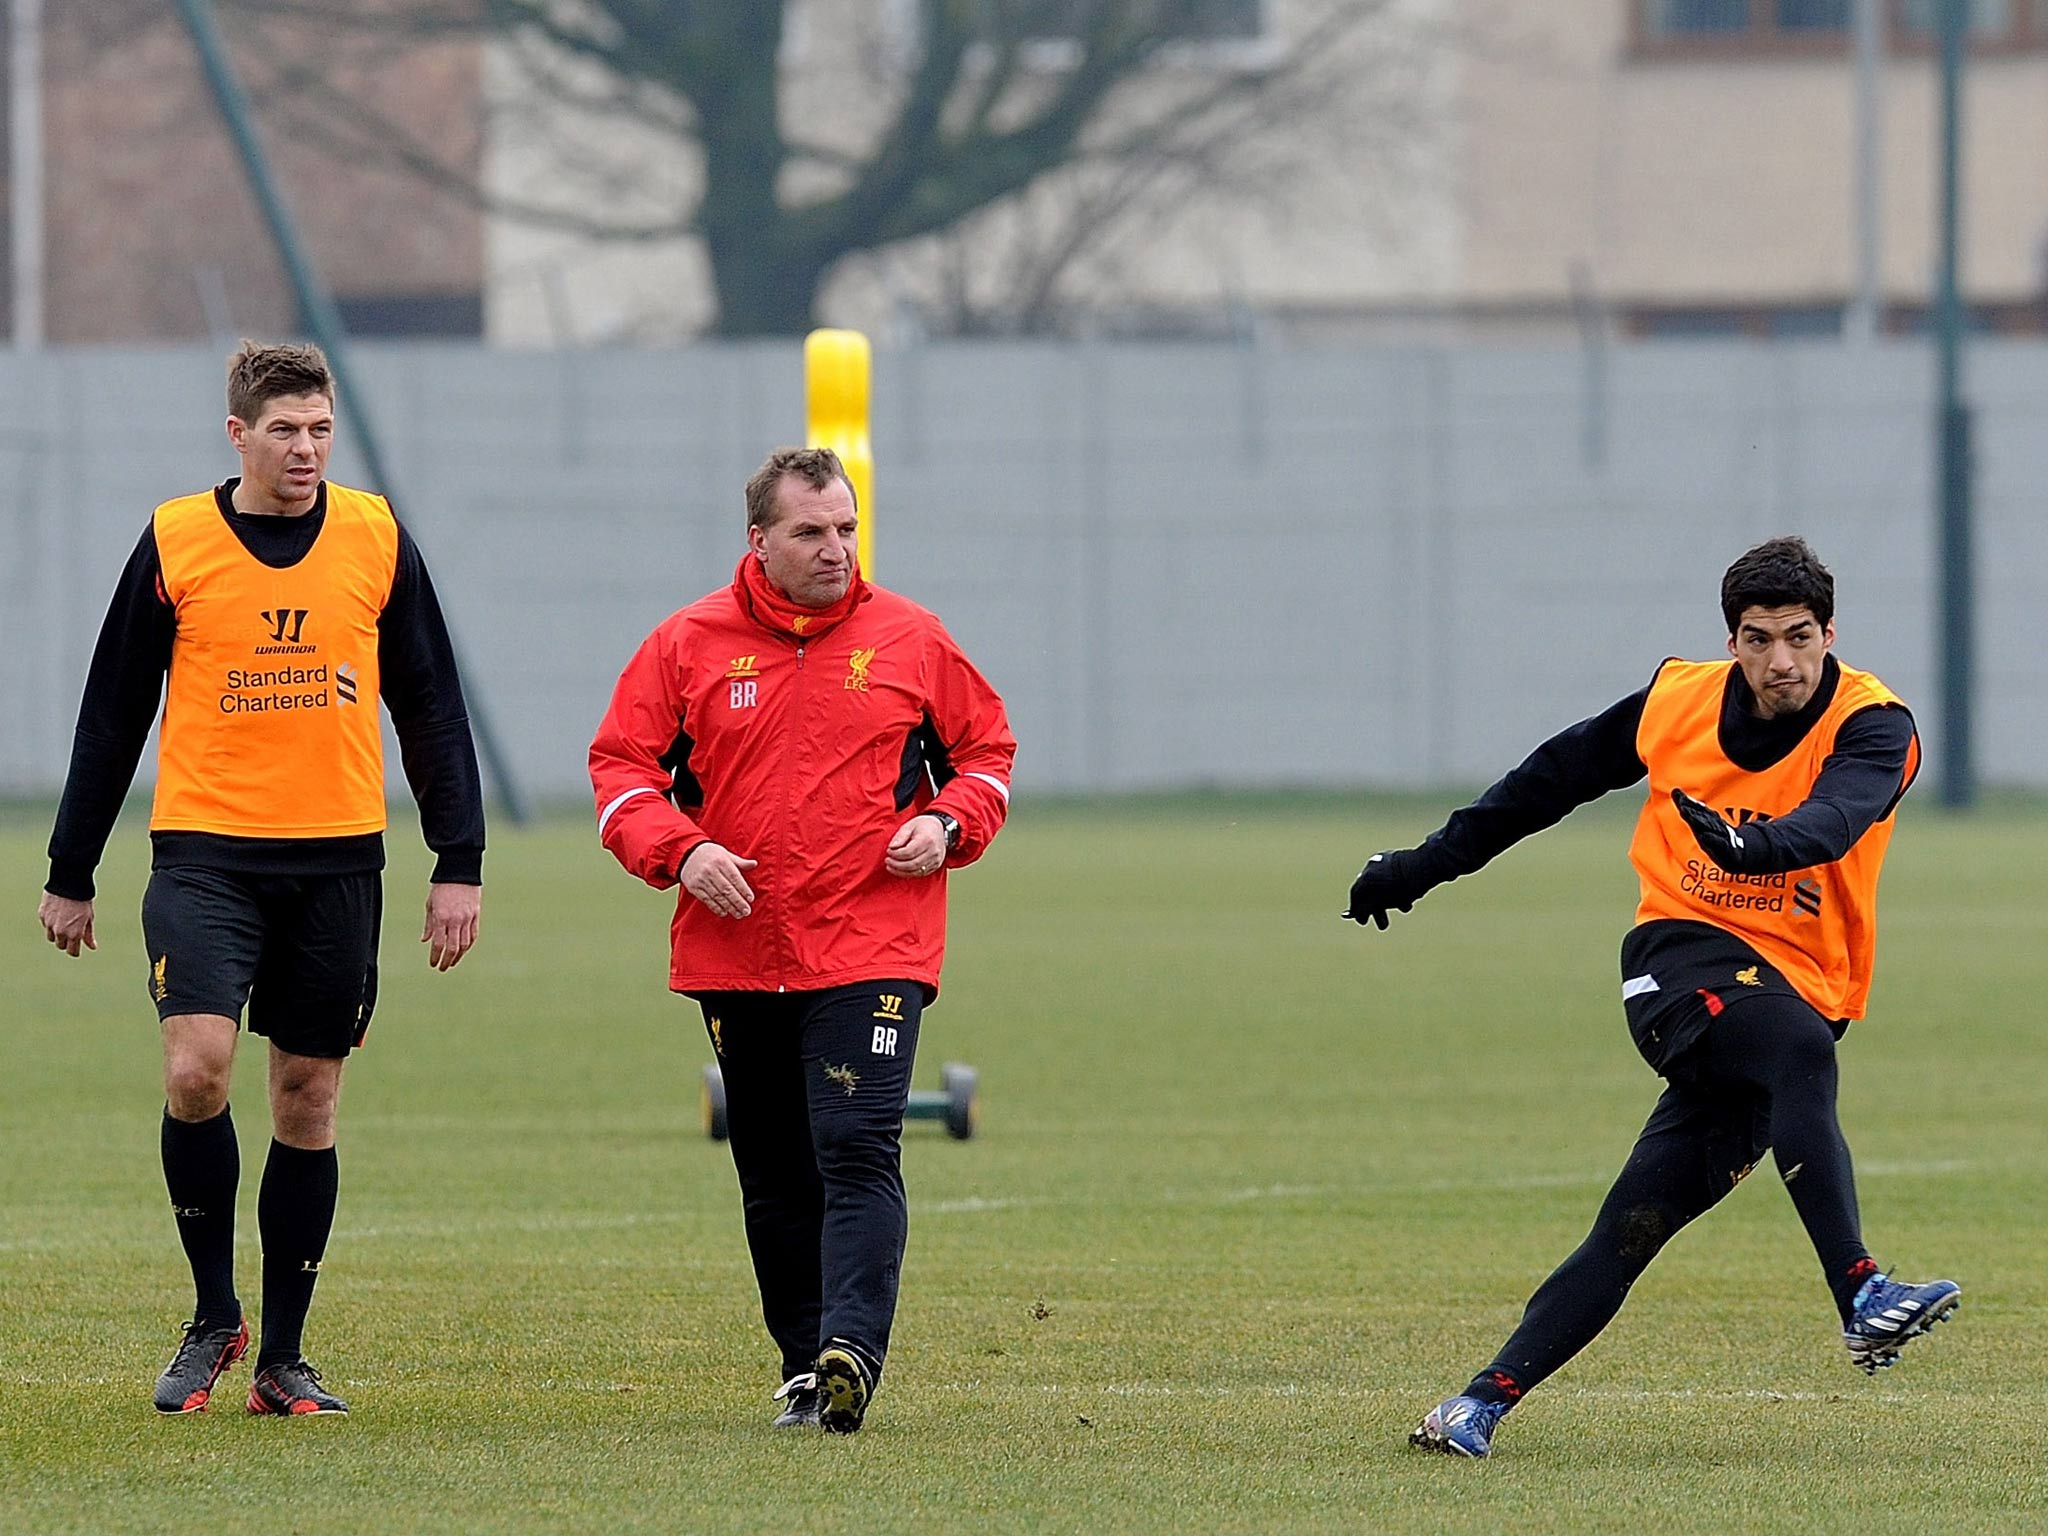 Steven Gerrard, Brendan Rodgers and Luis Suarez in training